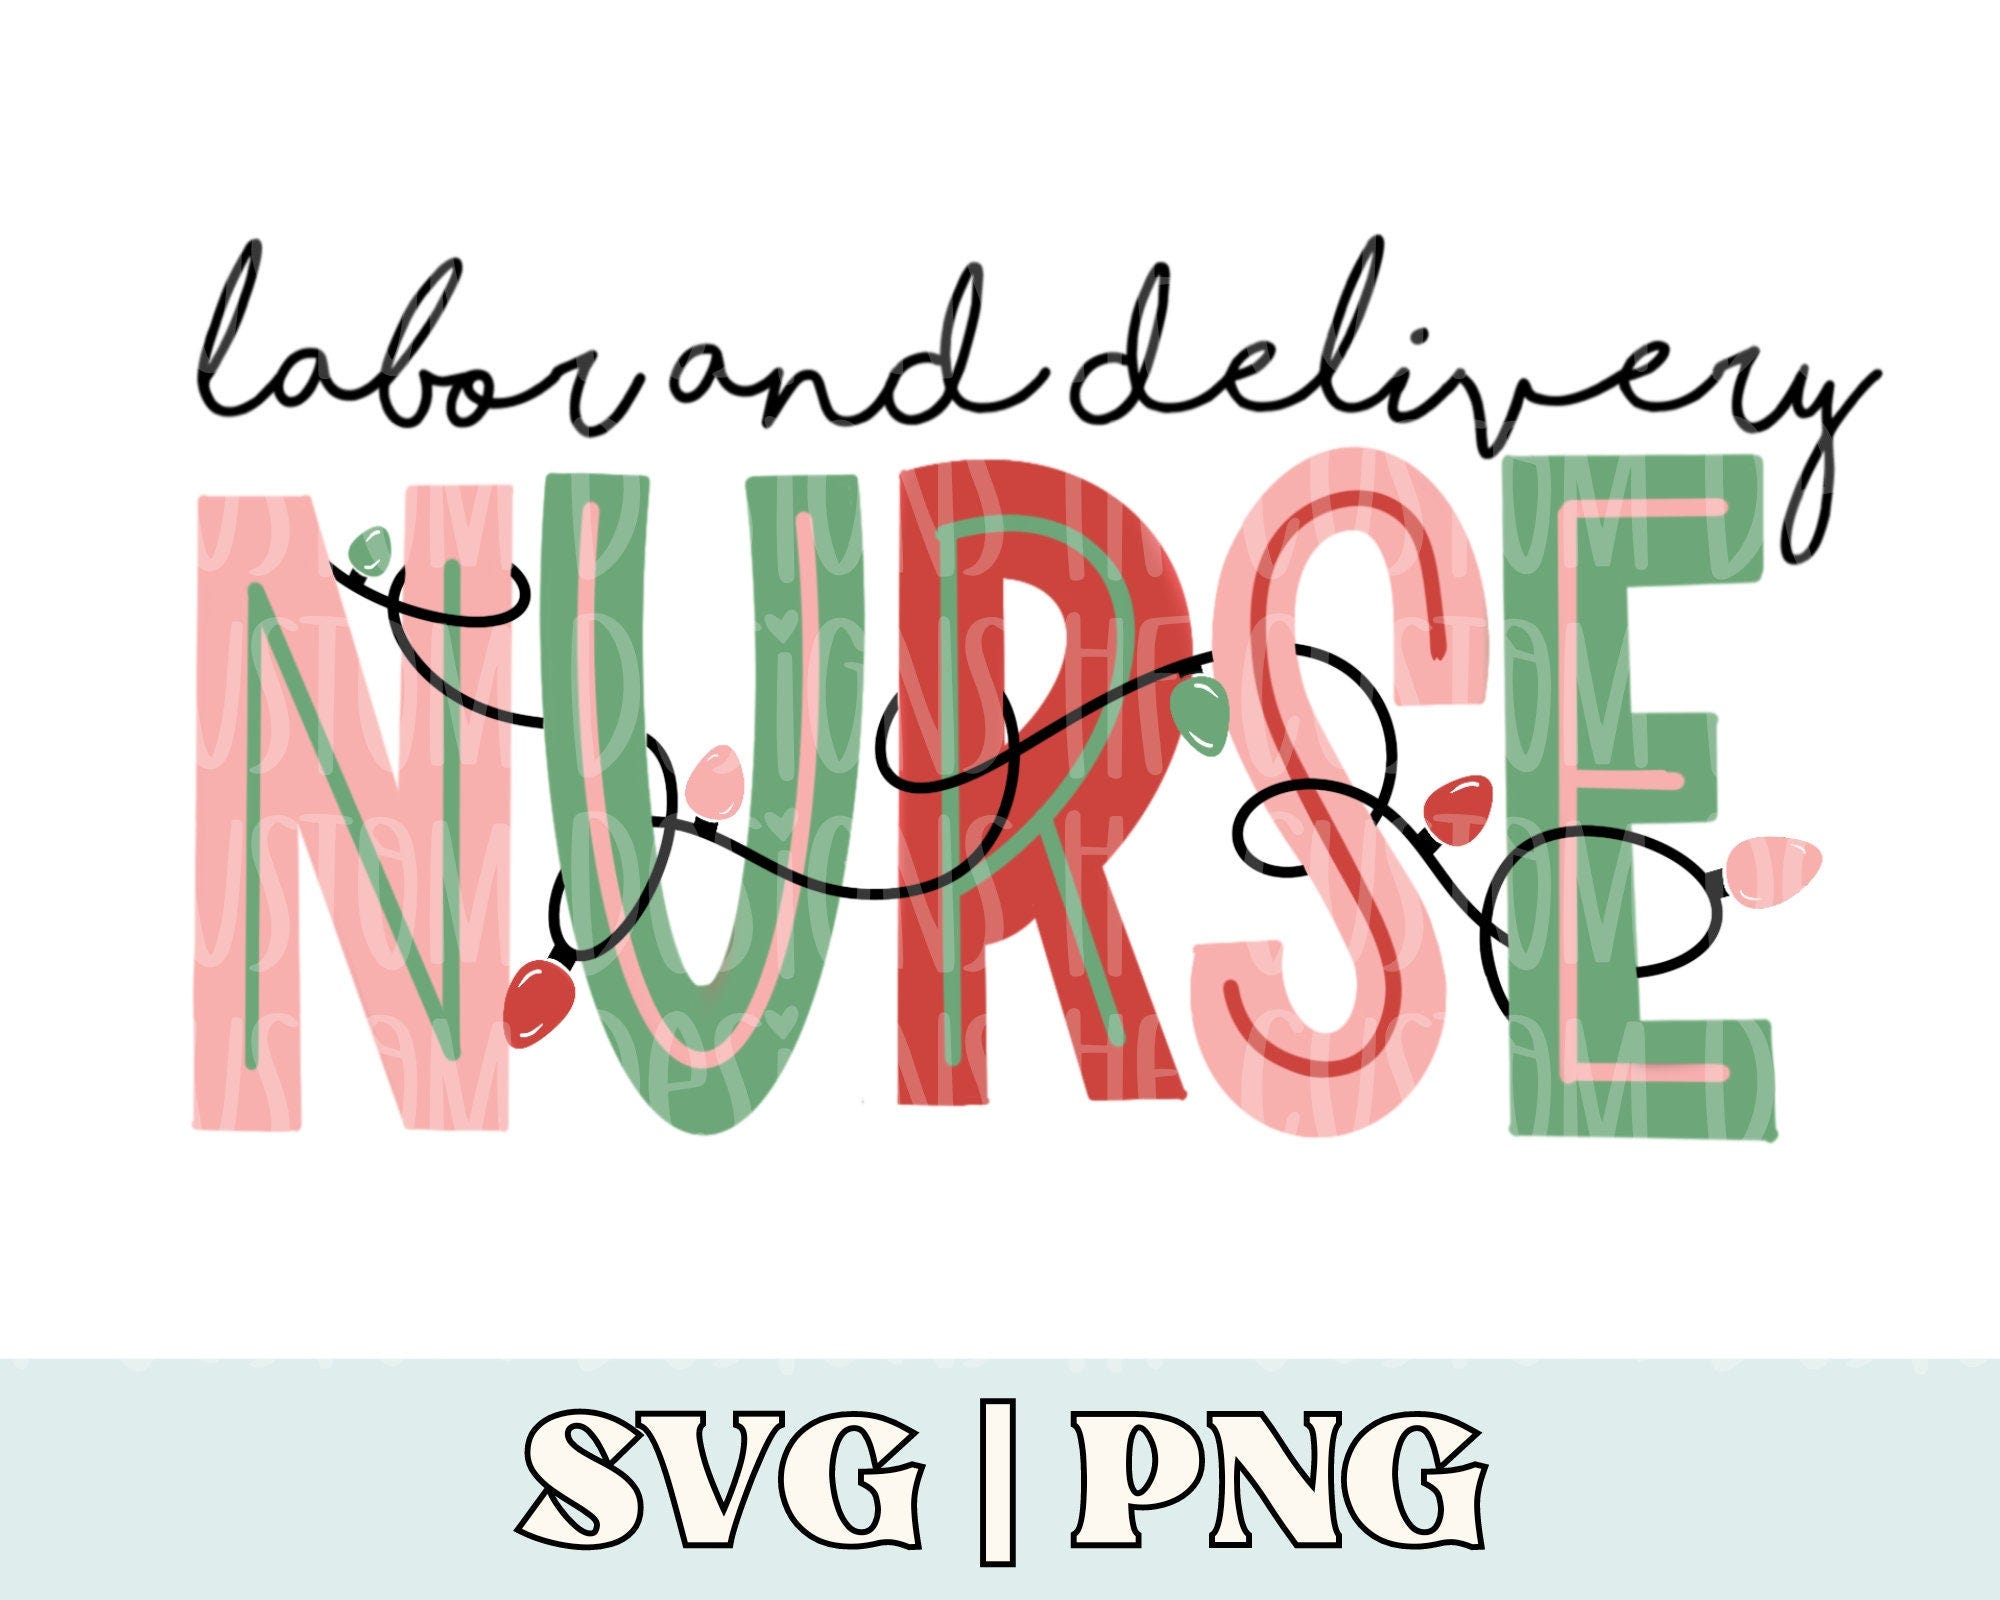 Labor and delivery nurse christmas png, nurse christmas png, nurse christmas png, labor and delivery nurse png, l and d nurse svg